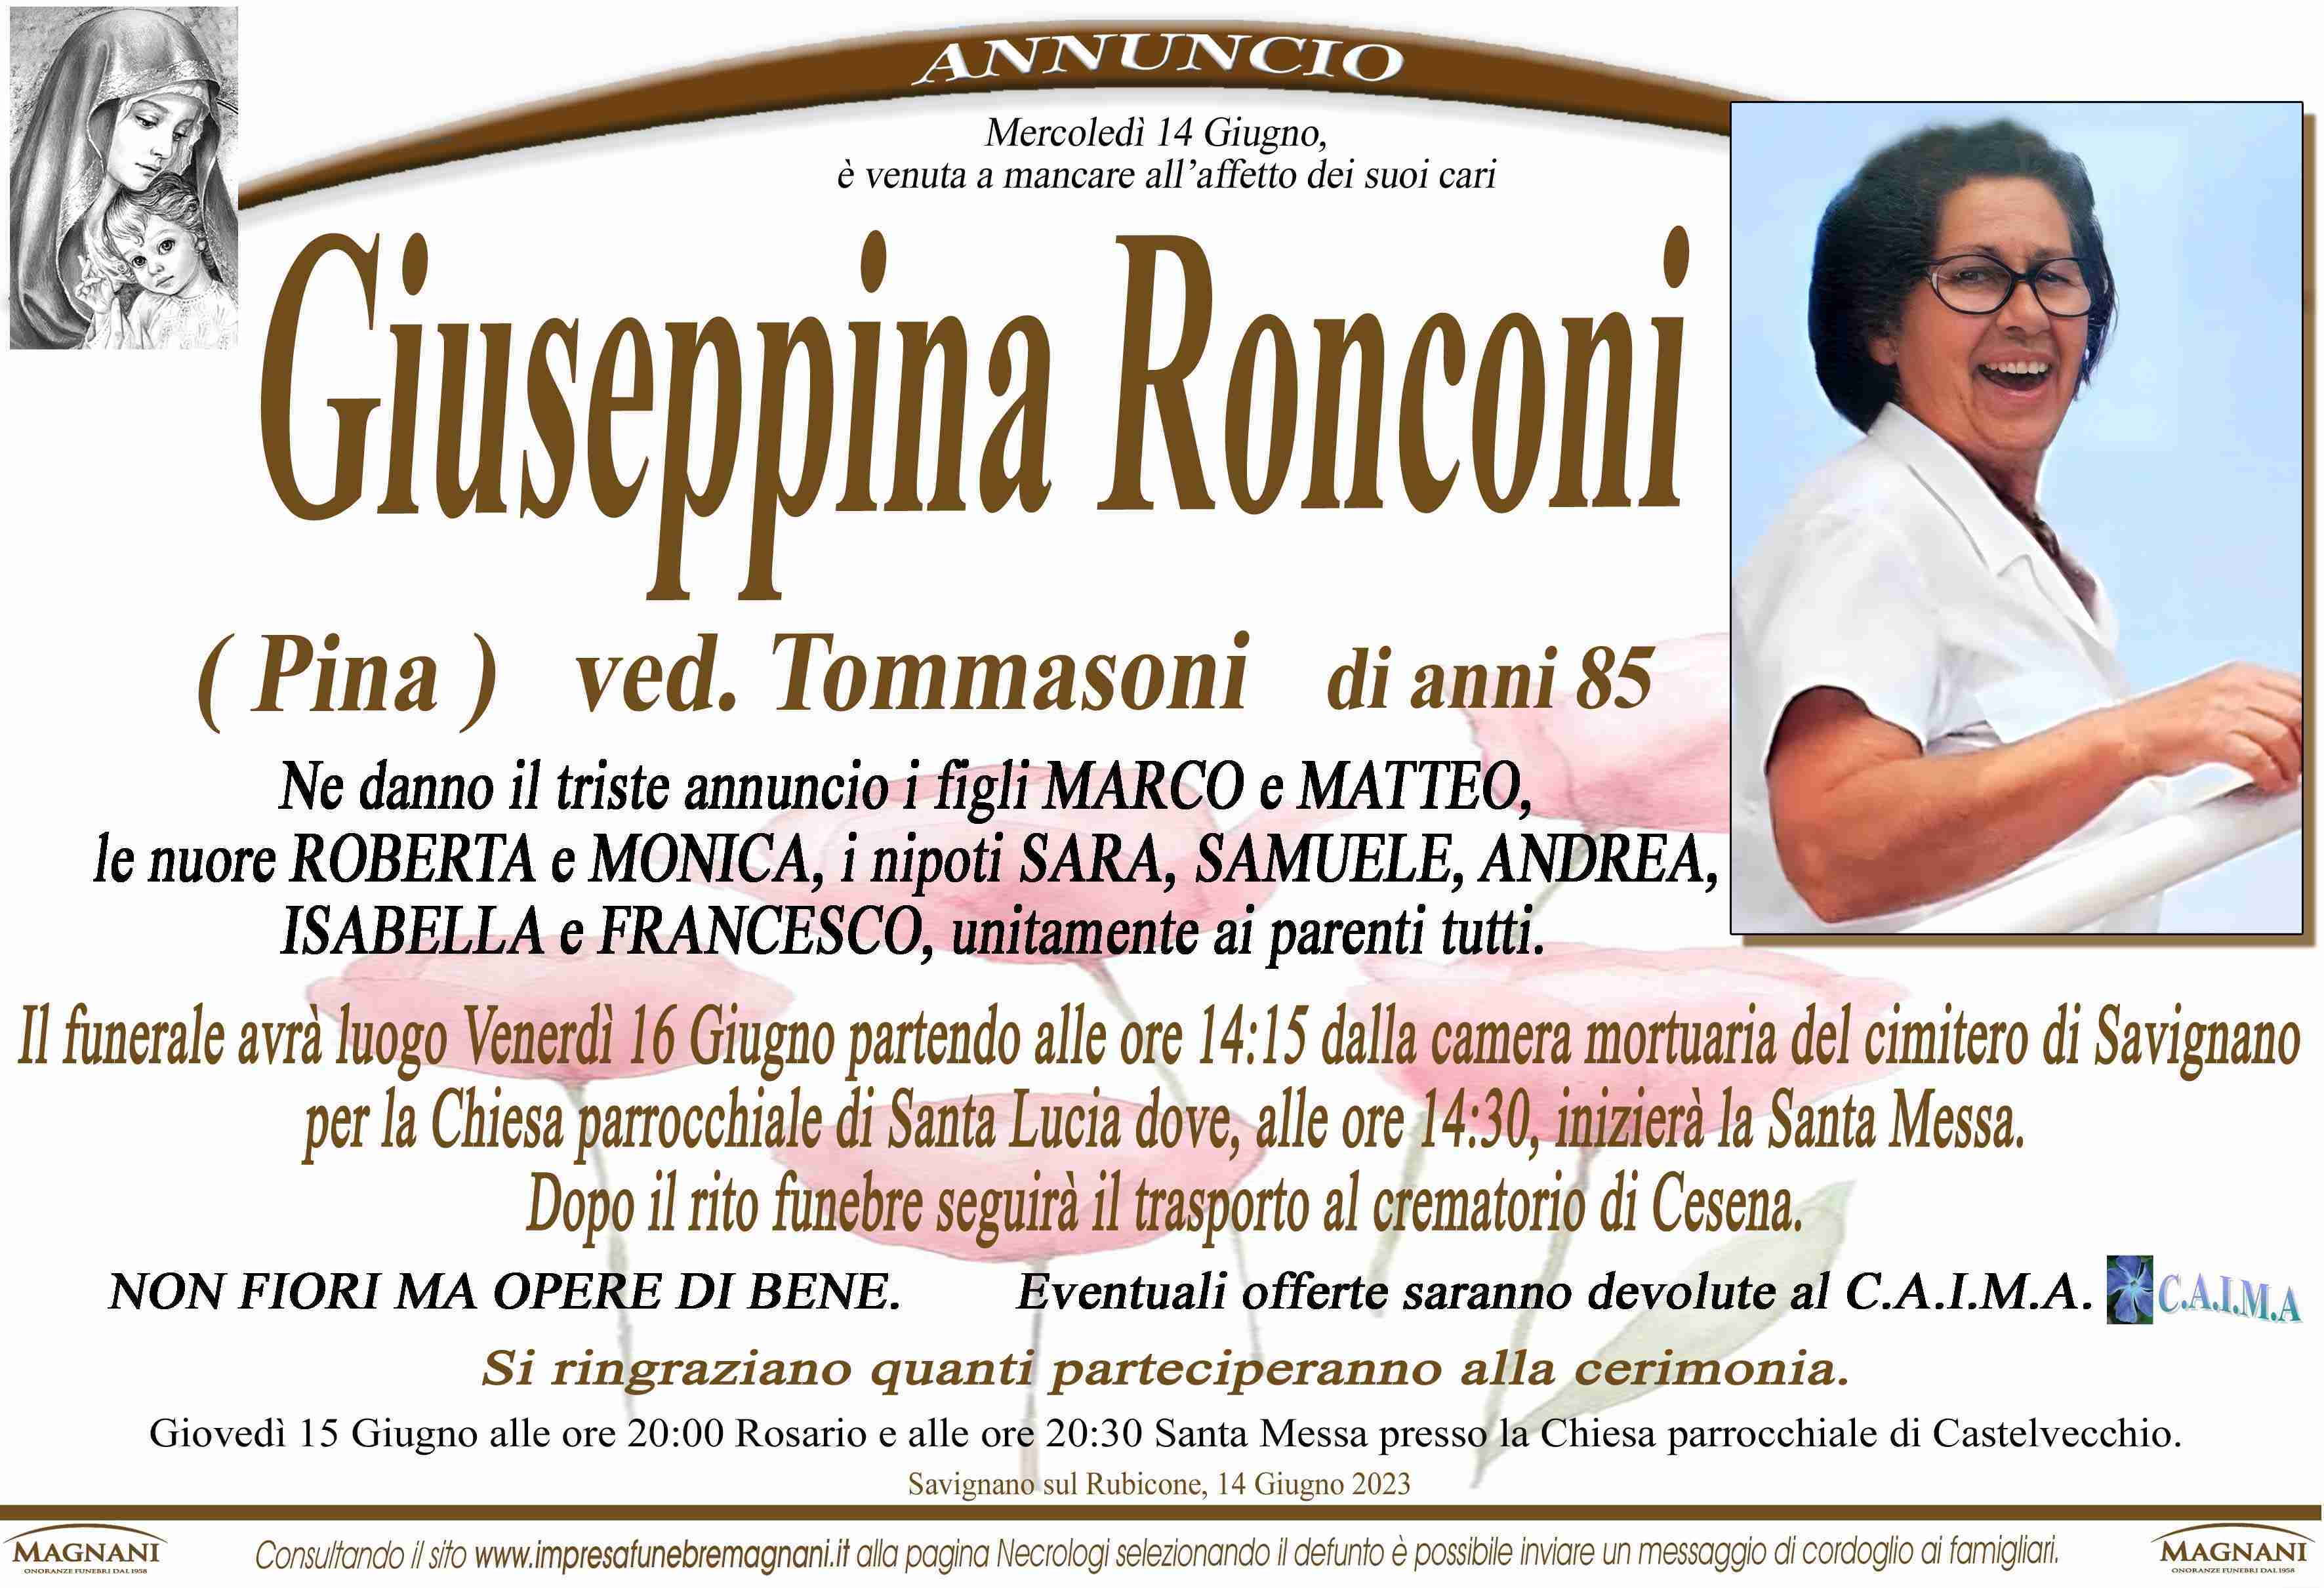 Giuseppina Ronconi